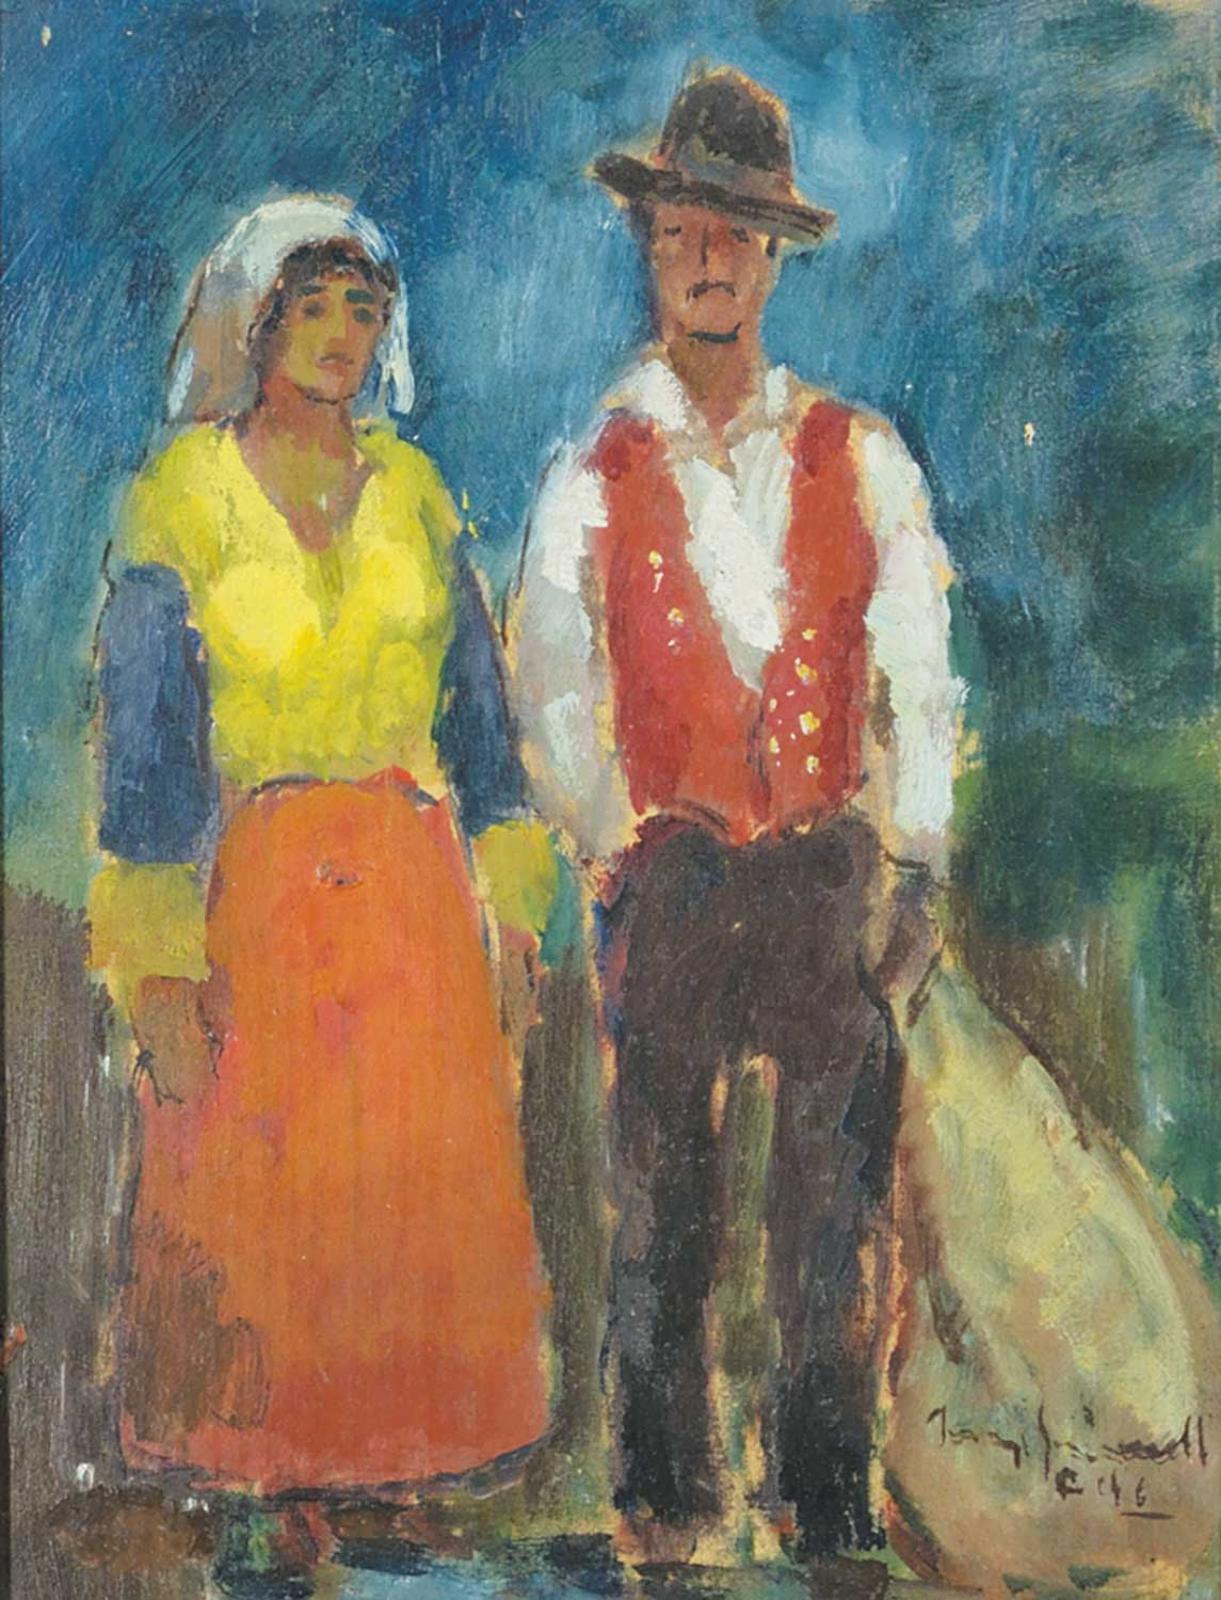 Bela Ivanyi Grunwald (1867-1940) - Untitled - The Young Couple